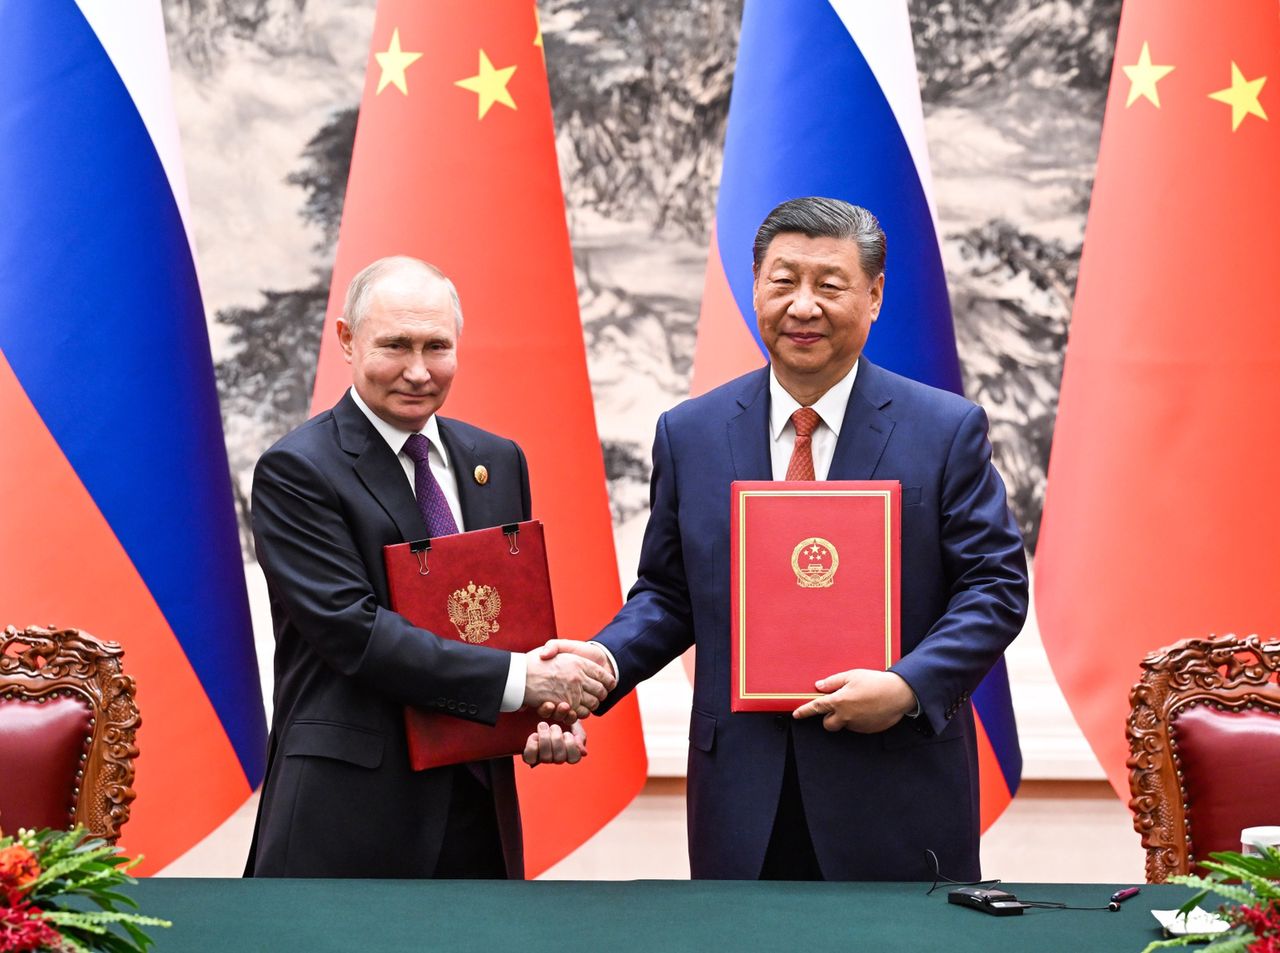 Putin seeks closer energy ties with China amid Western embargo